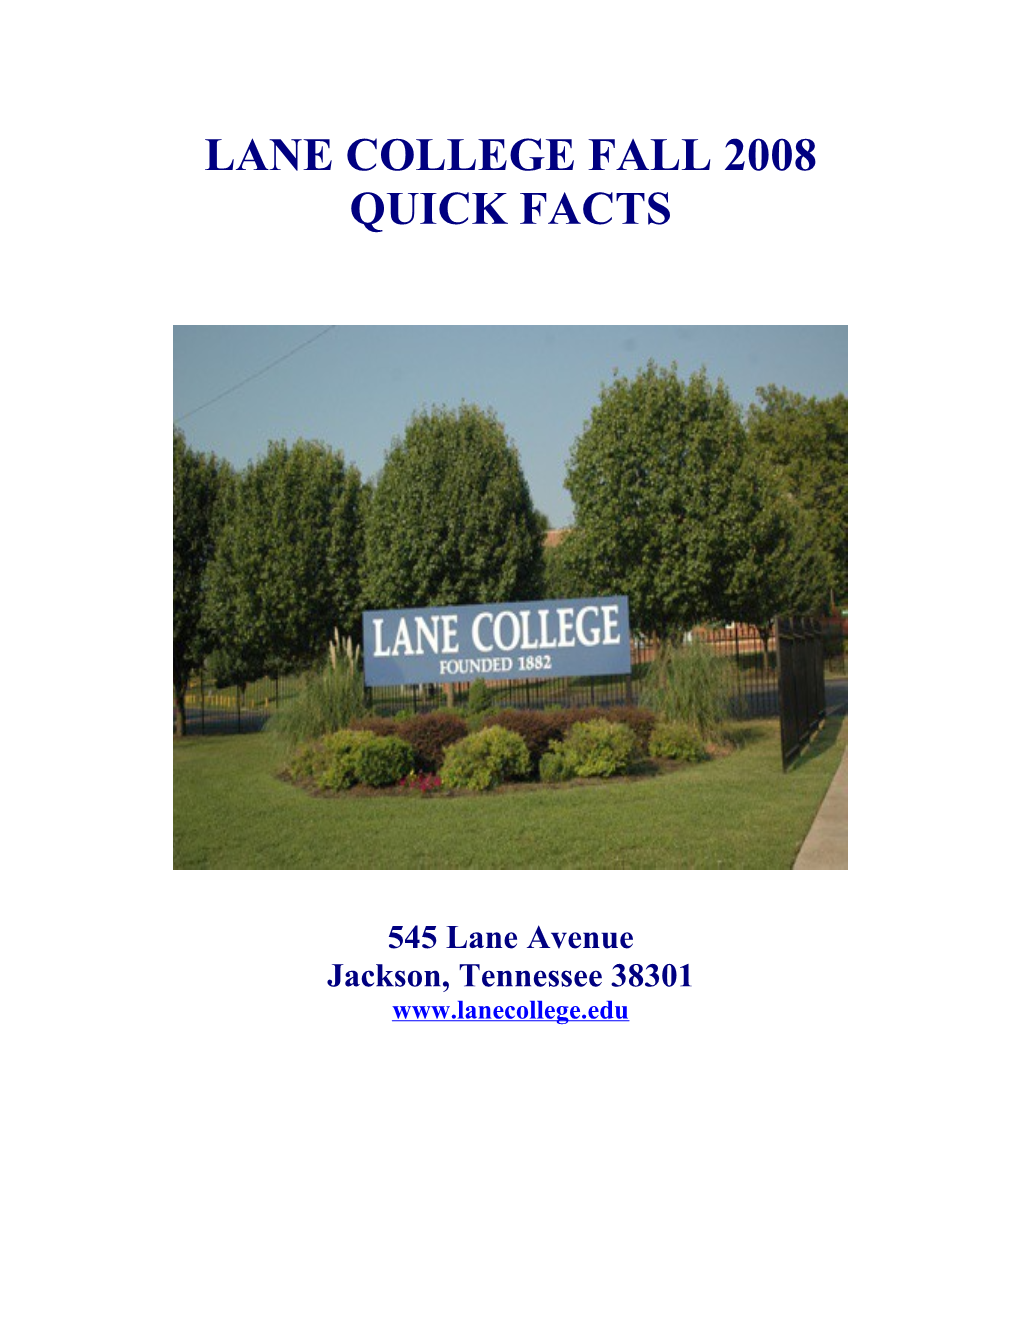 Lanecollege Fall 2008